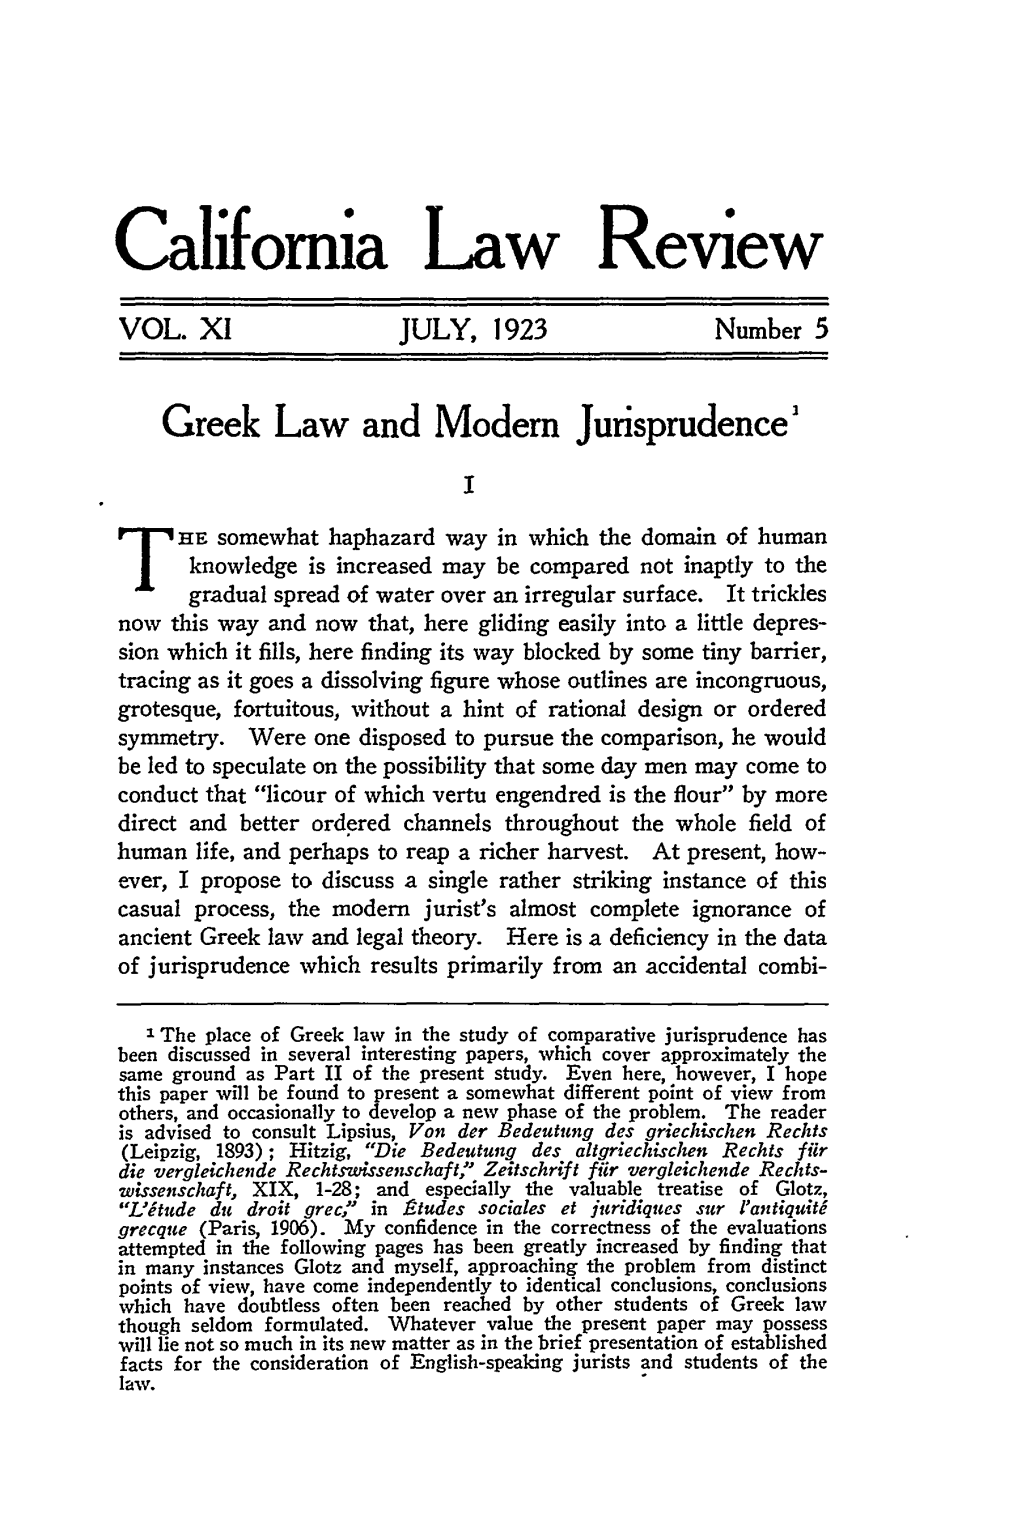 Greek Law and Modern Jurisprudence'